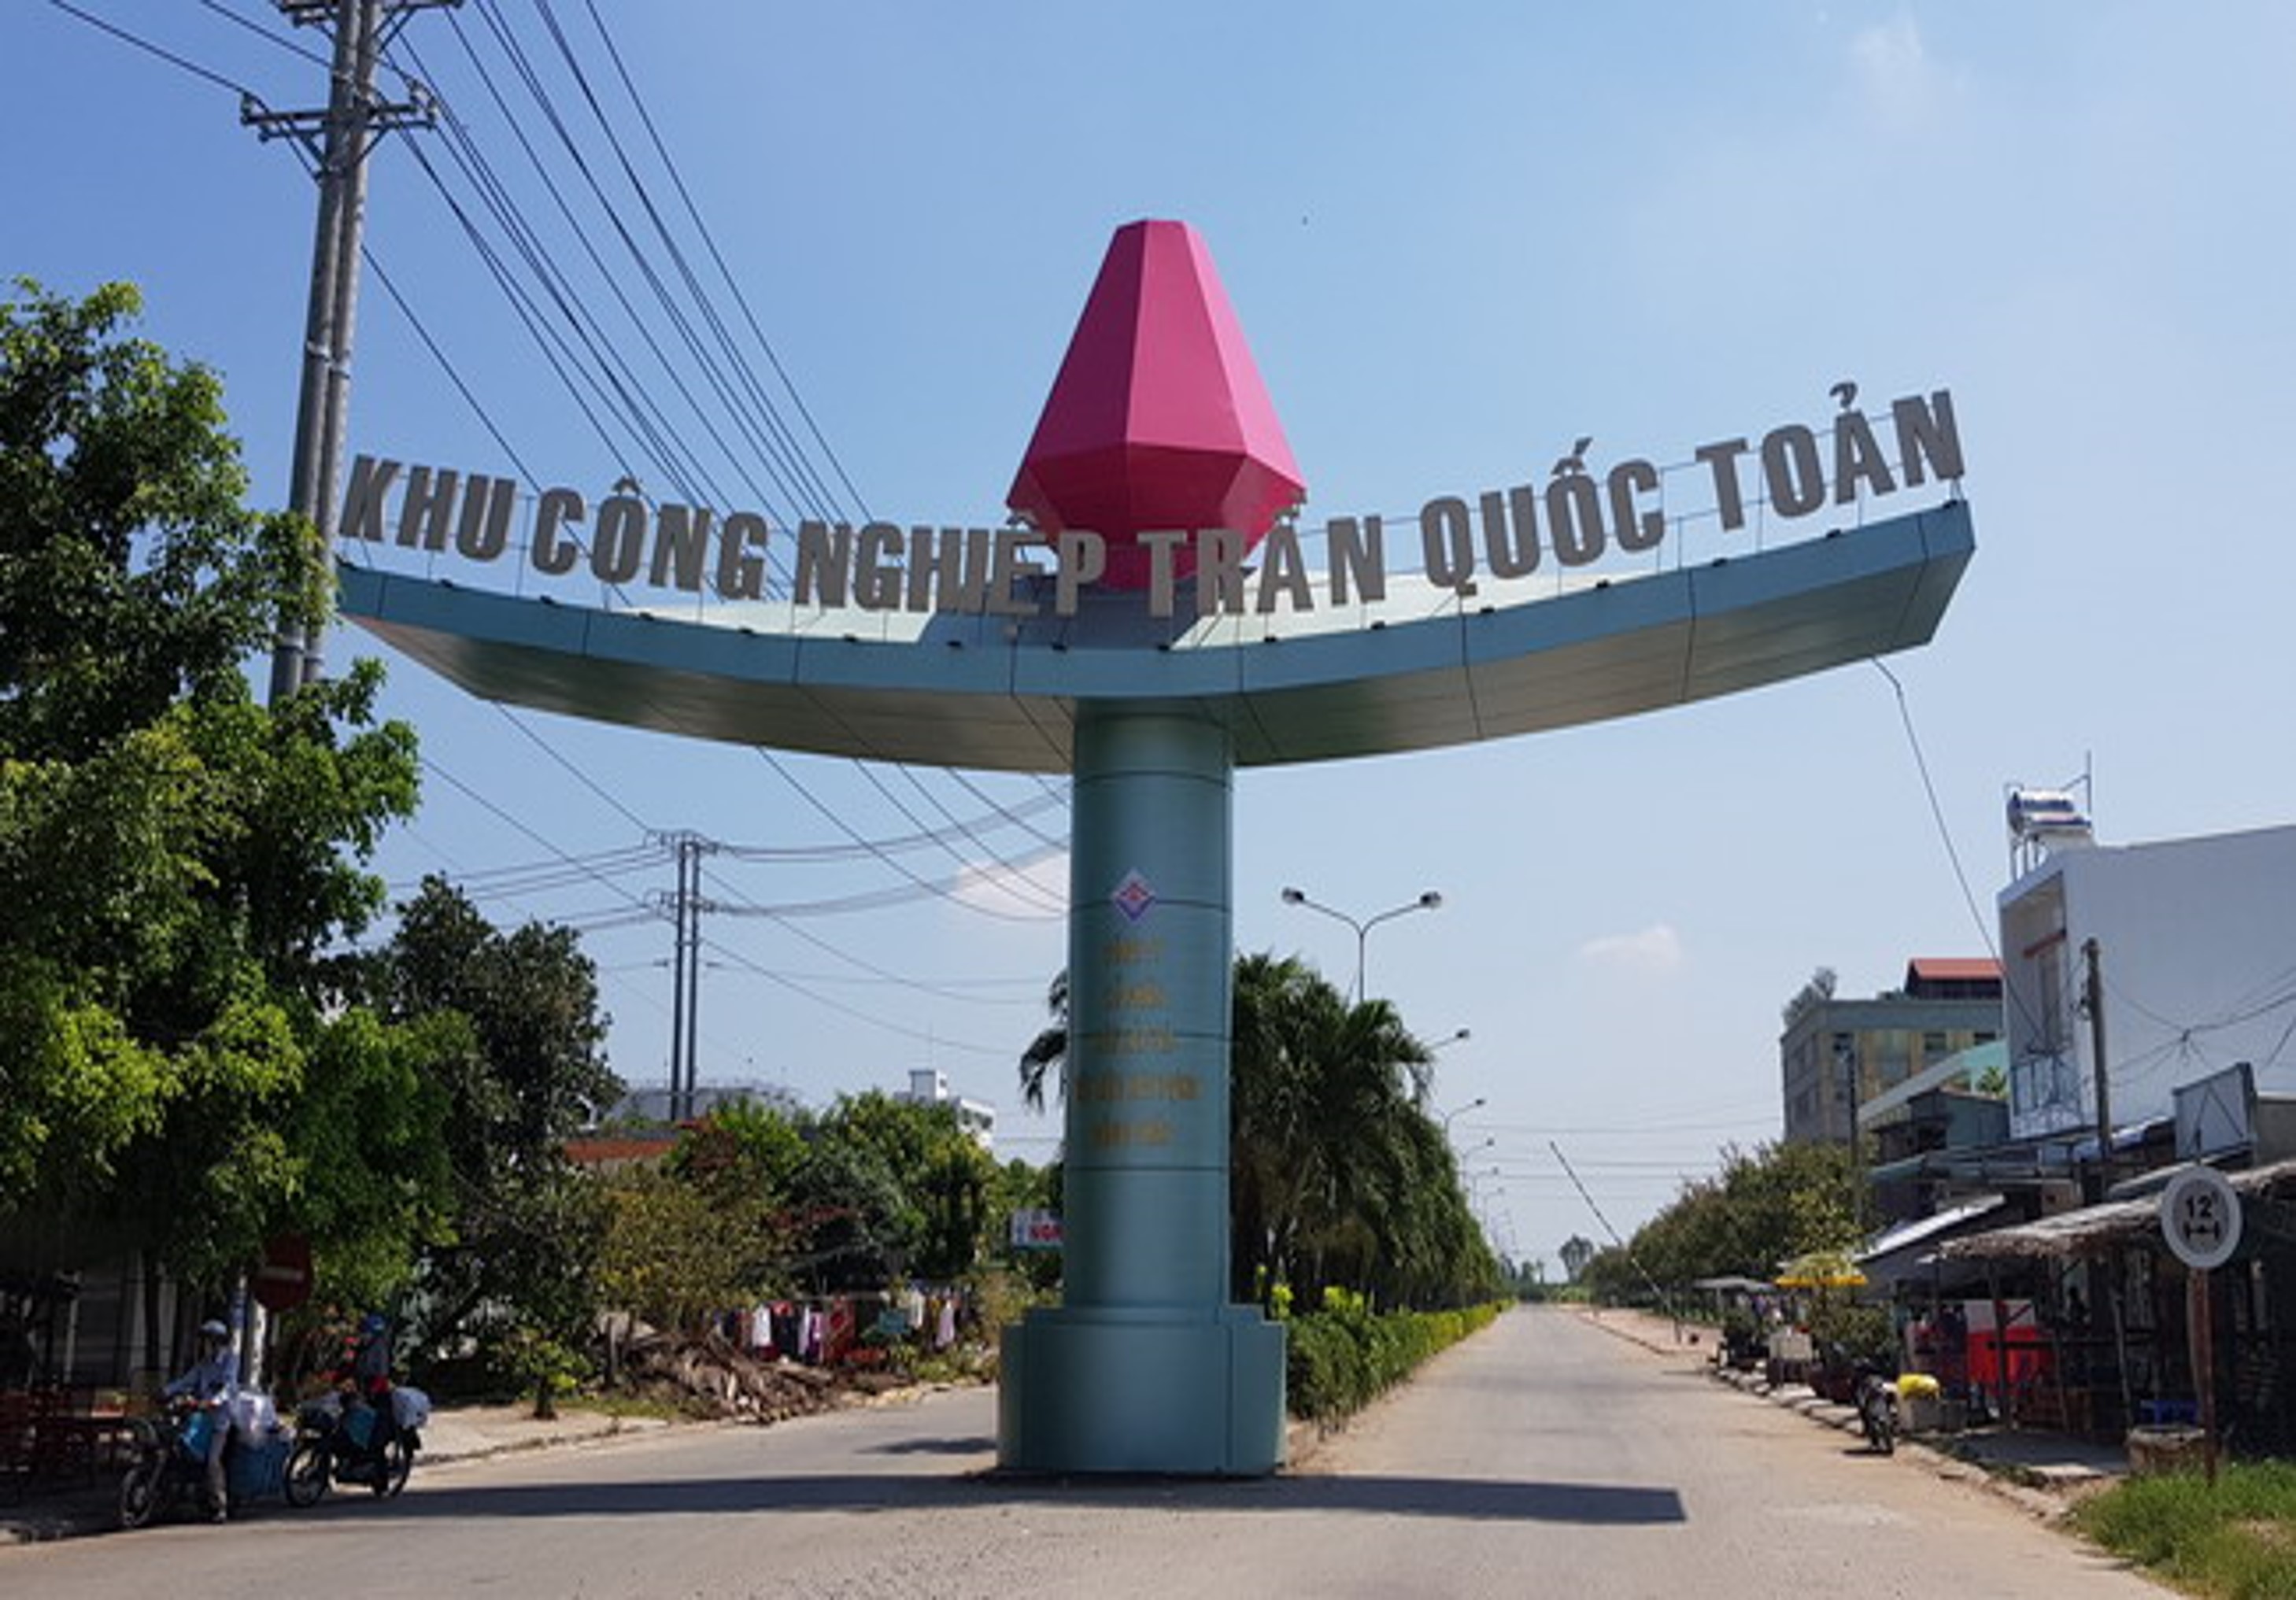 Tran Quoc Toan Industrial Park